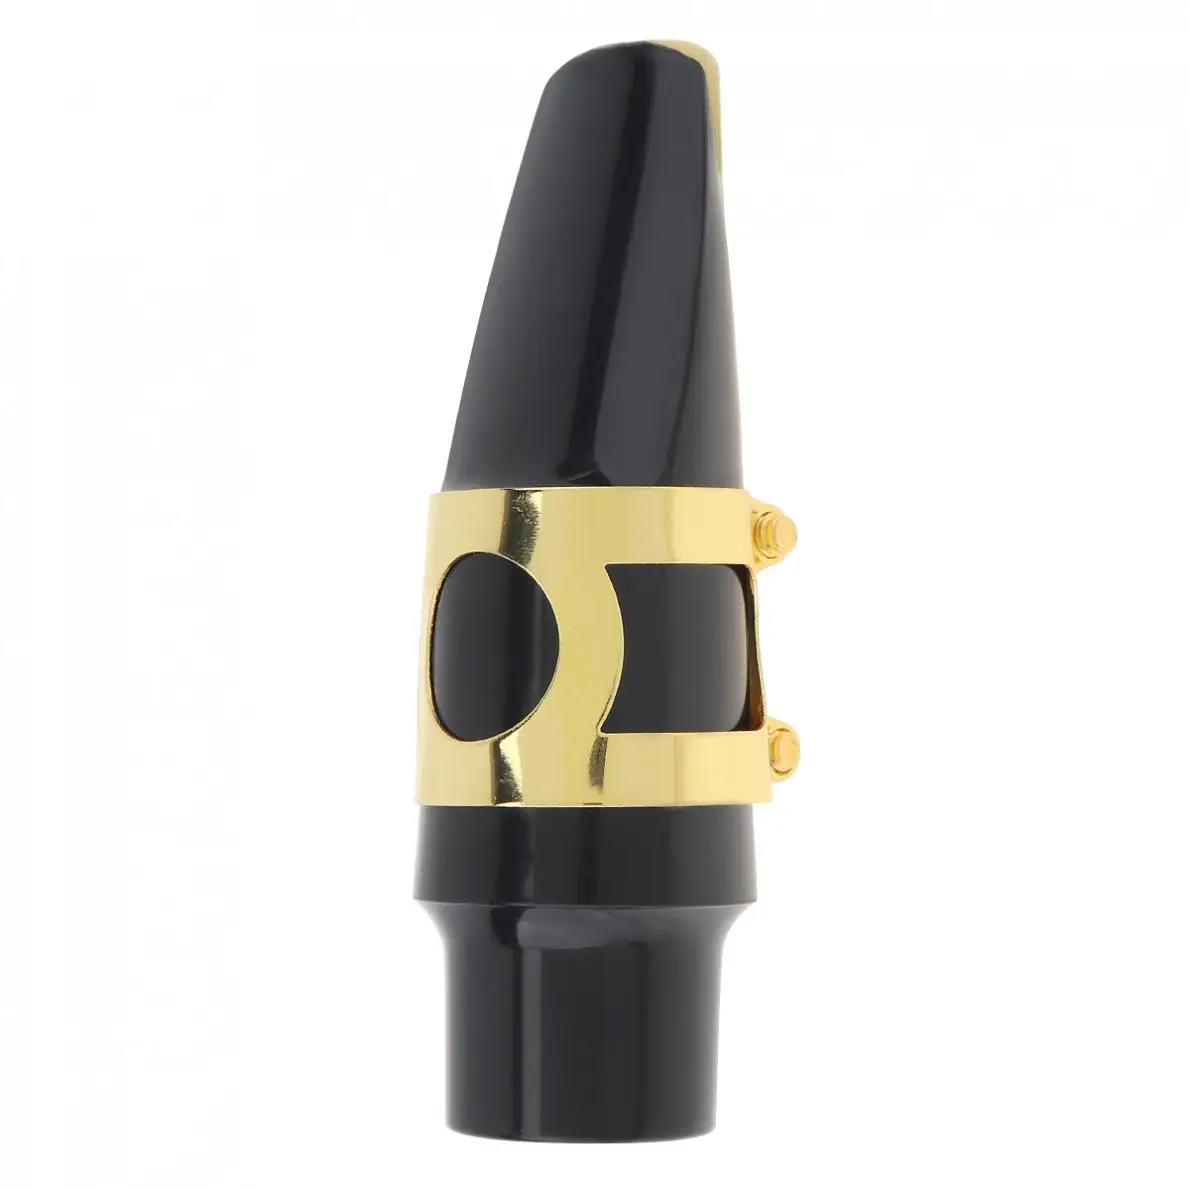 45MM Silicone Alto Saxophone Mouthpiece Cap Musical Accessories Black 